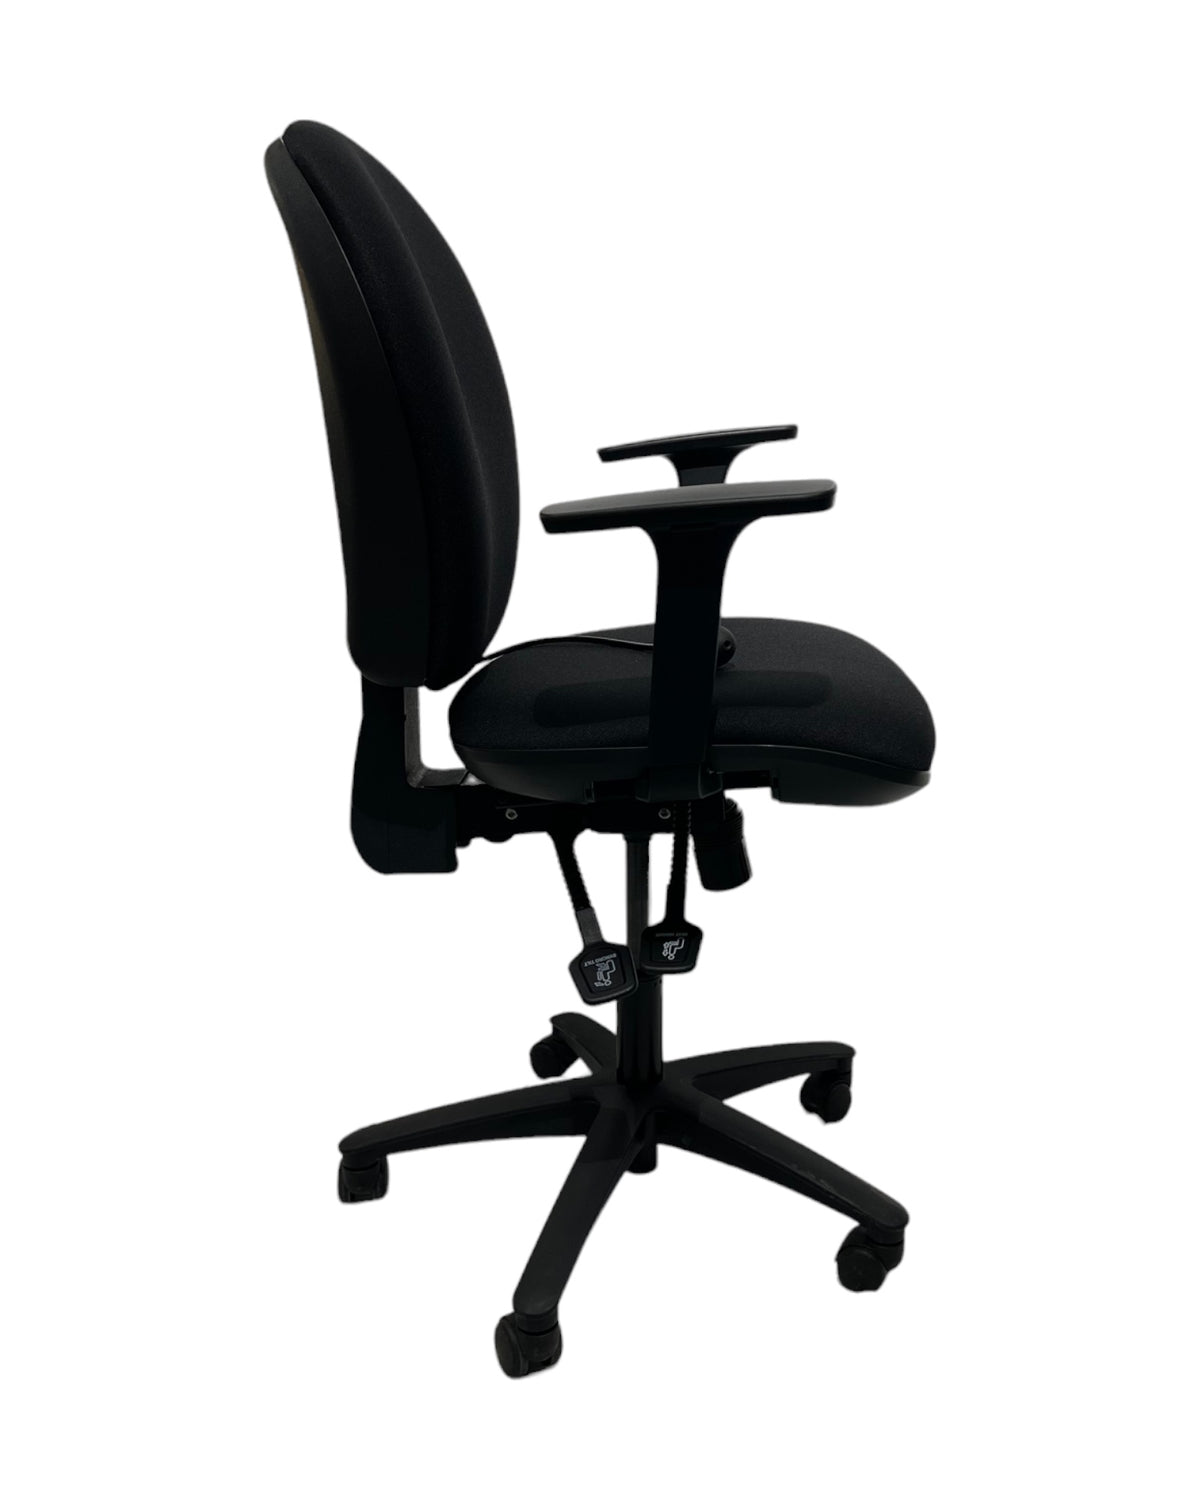 Kinetic 4 upholstered operator chair